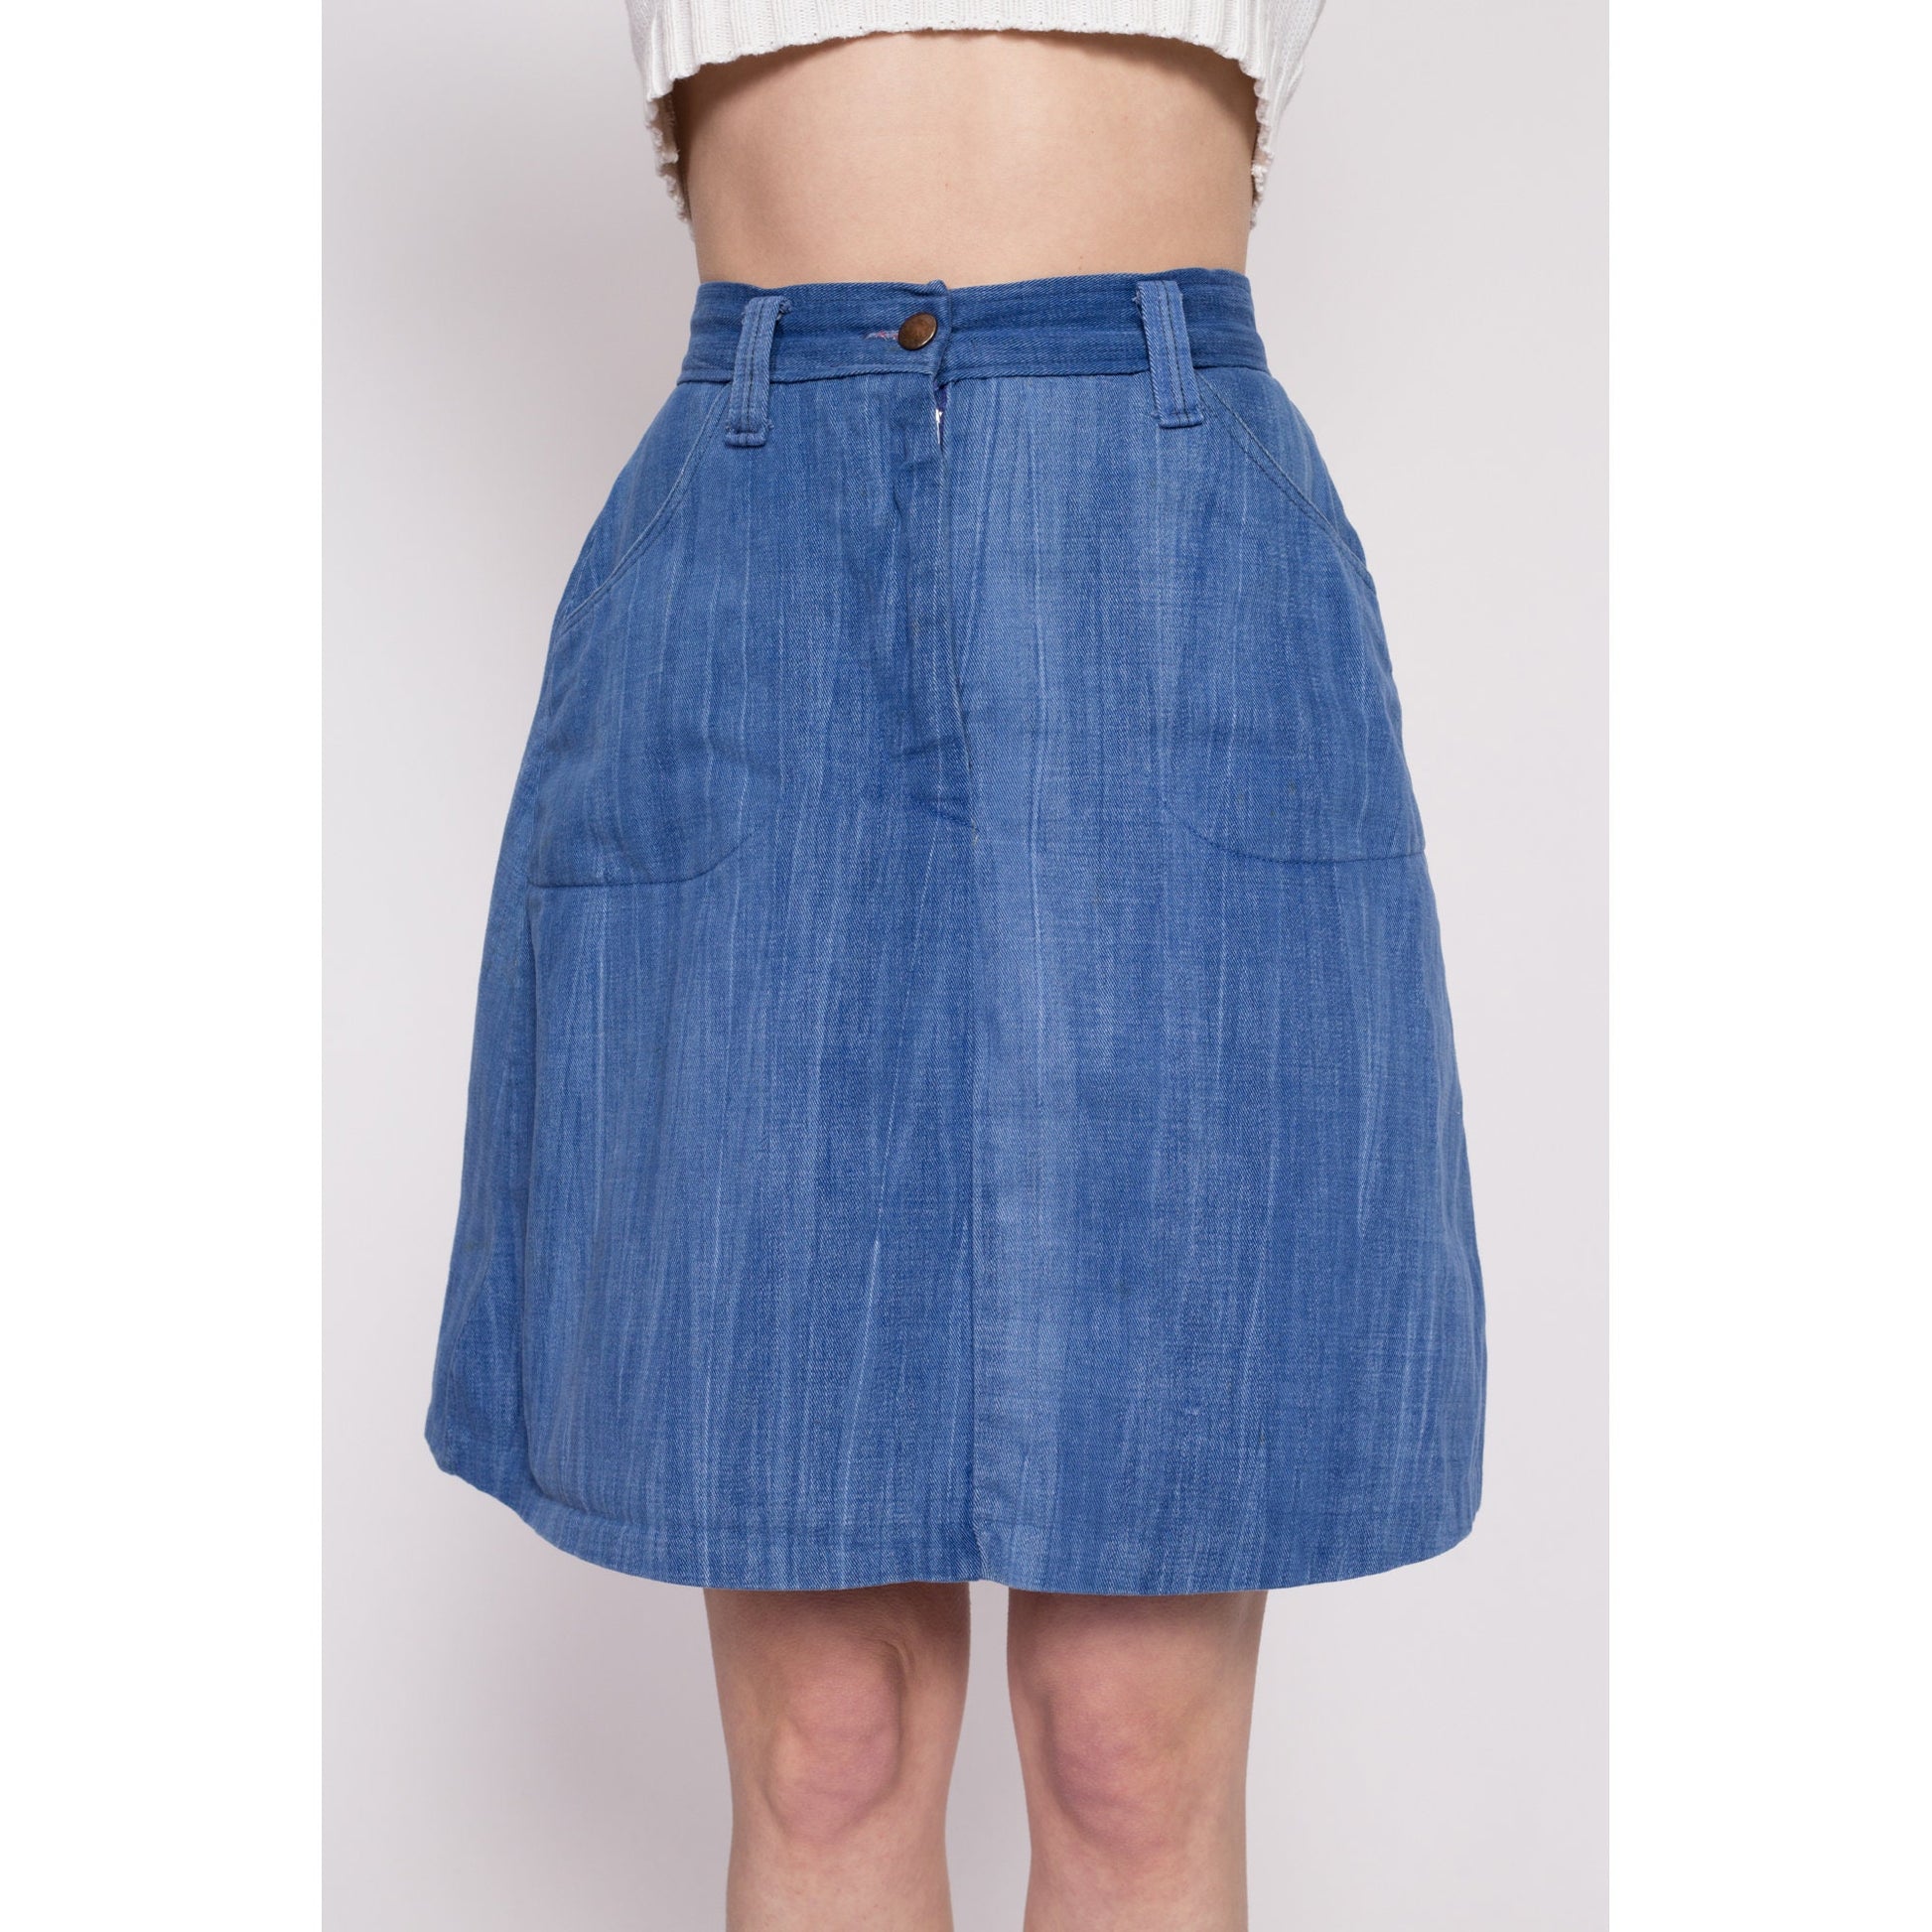 70s Boho Denim A Line Mini Skirt - Small, 26" | Vintage Flannel Lined High Waisted Flared Jean Skirt